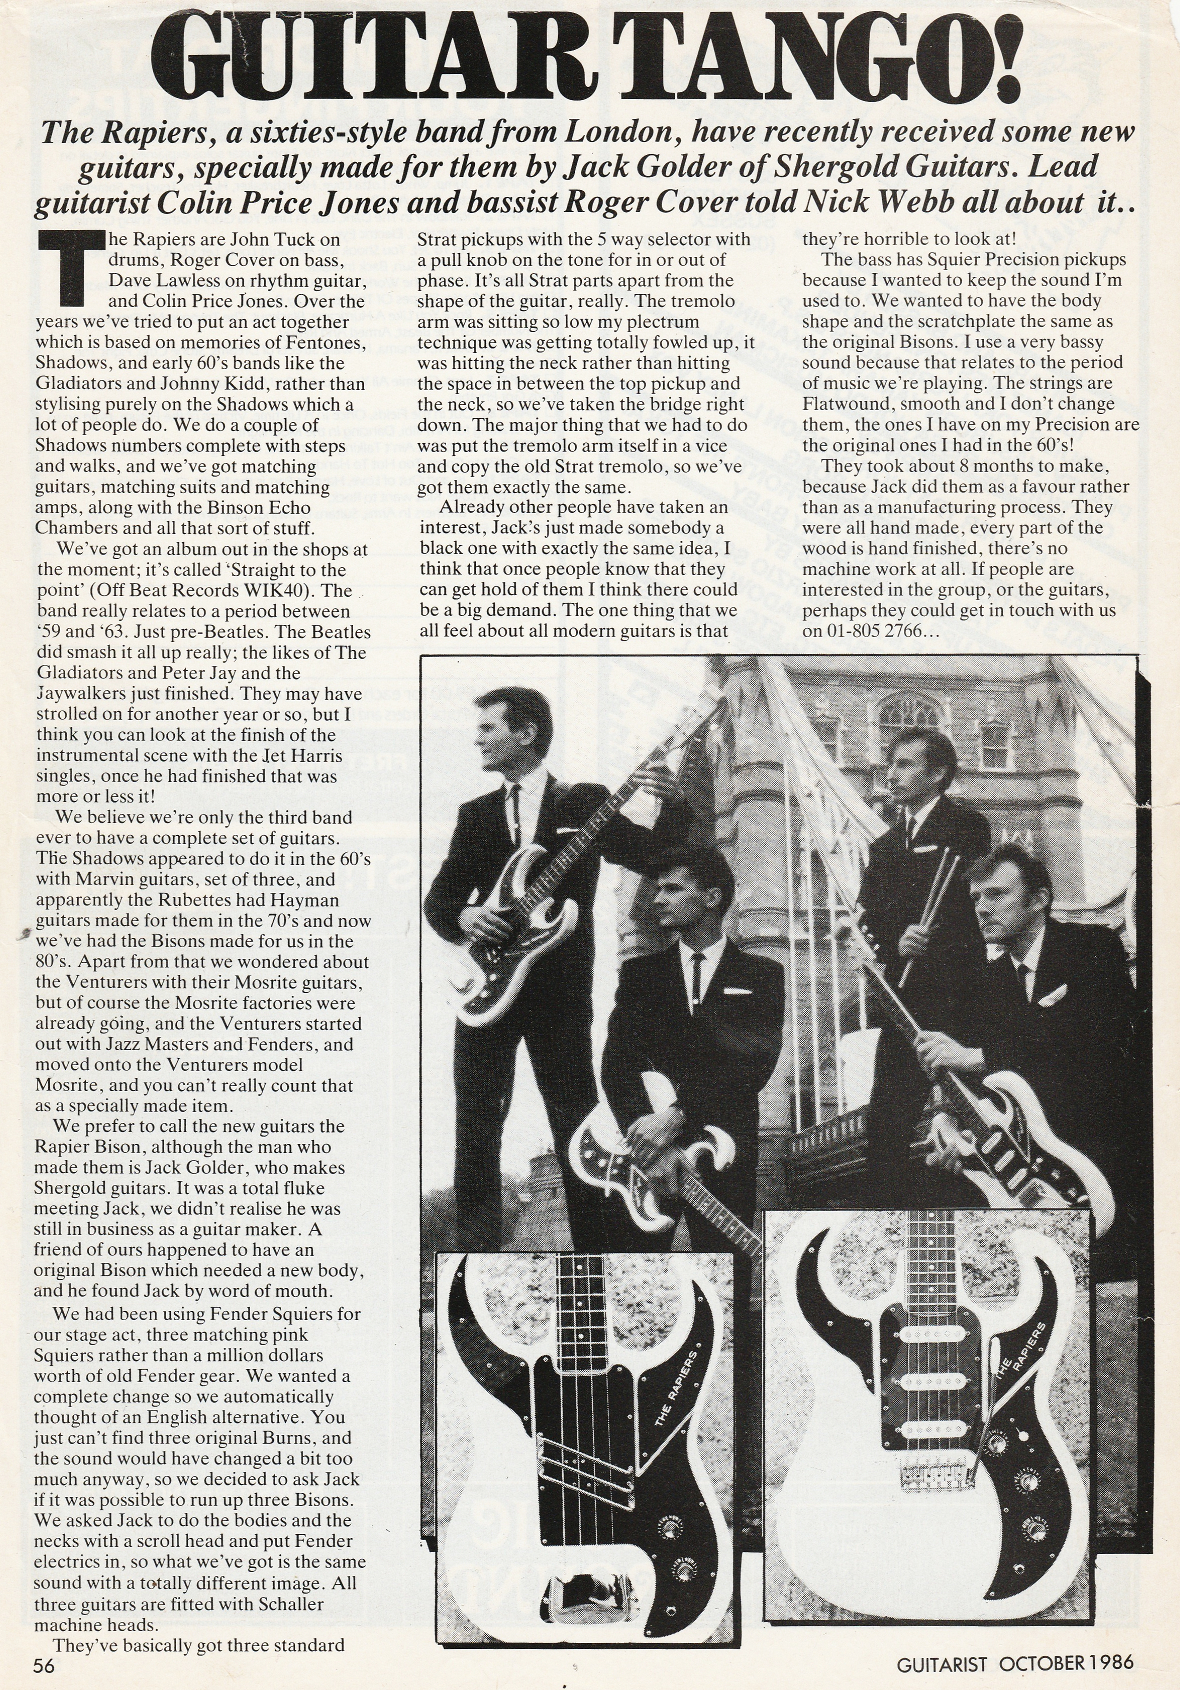 The Rapiers, Guitarist Magazine, October 1986